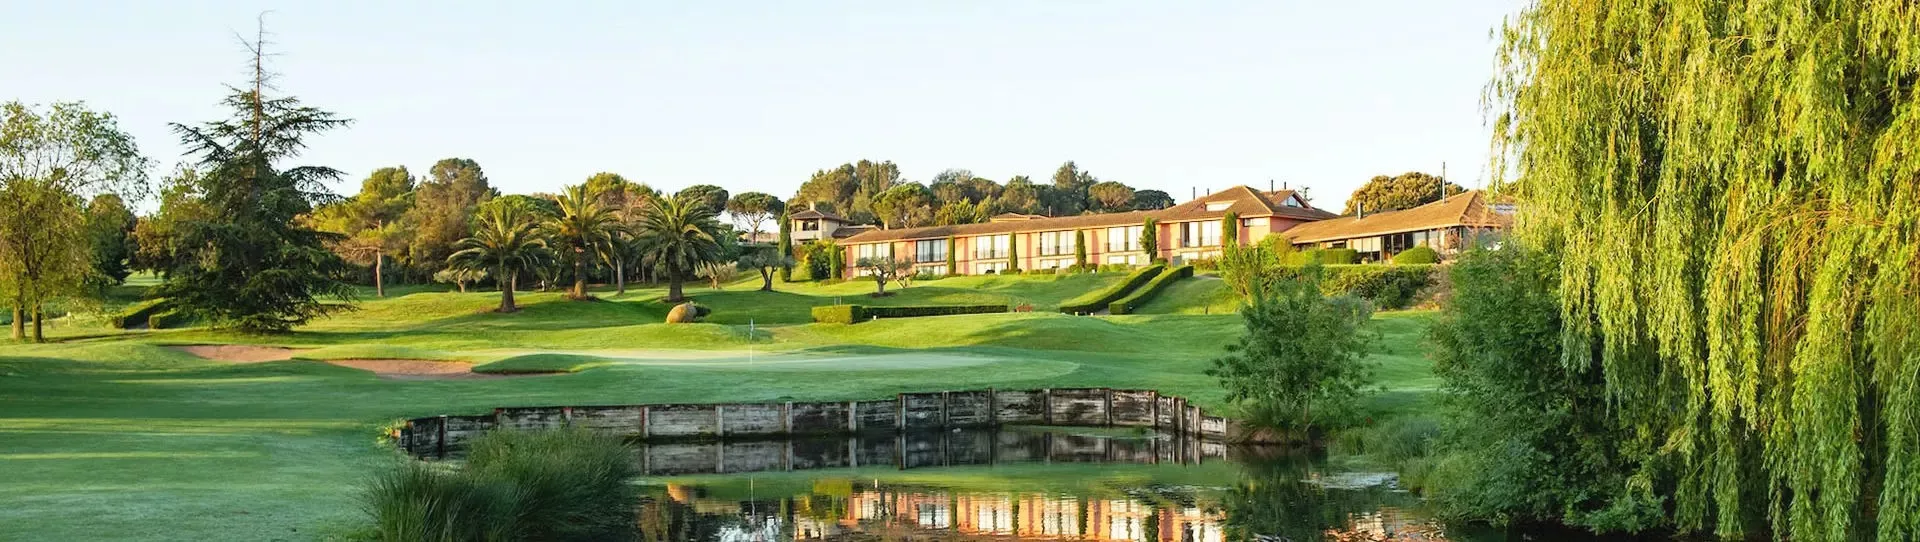 Spain golf courses - Torremirona Golf Course - Photo 1